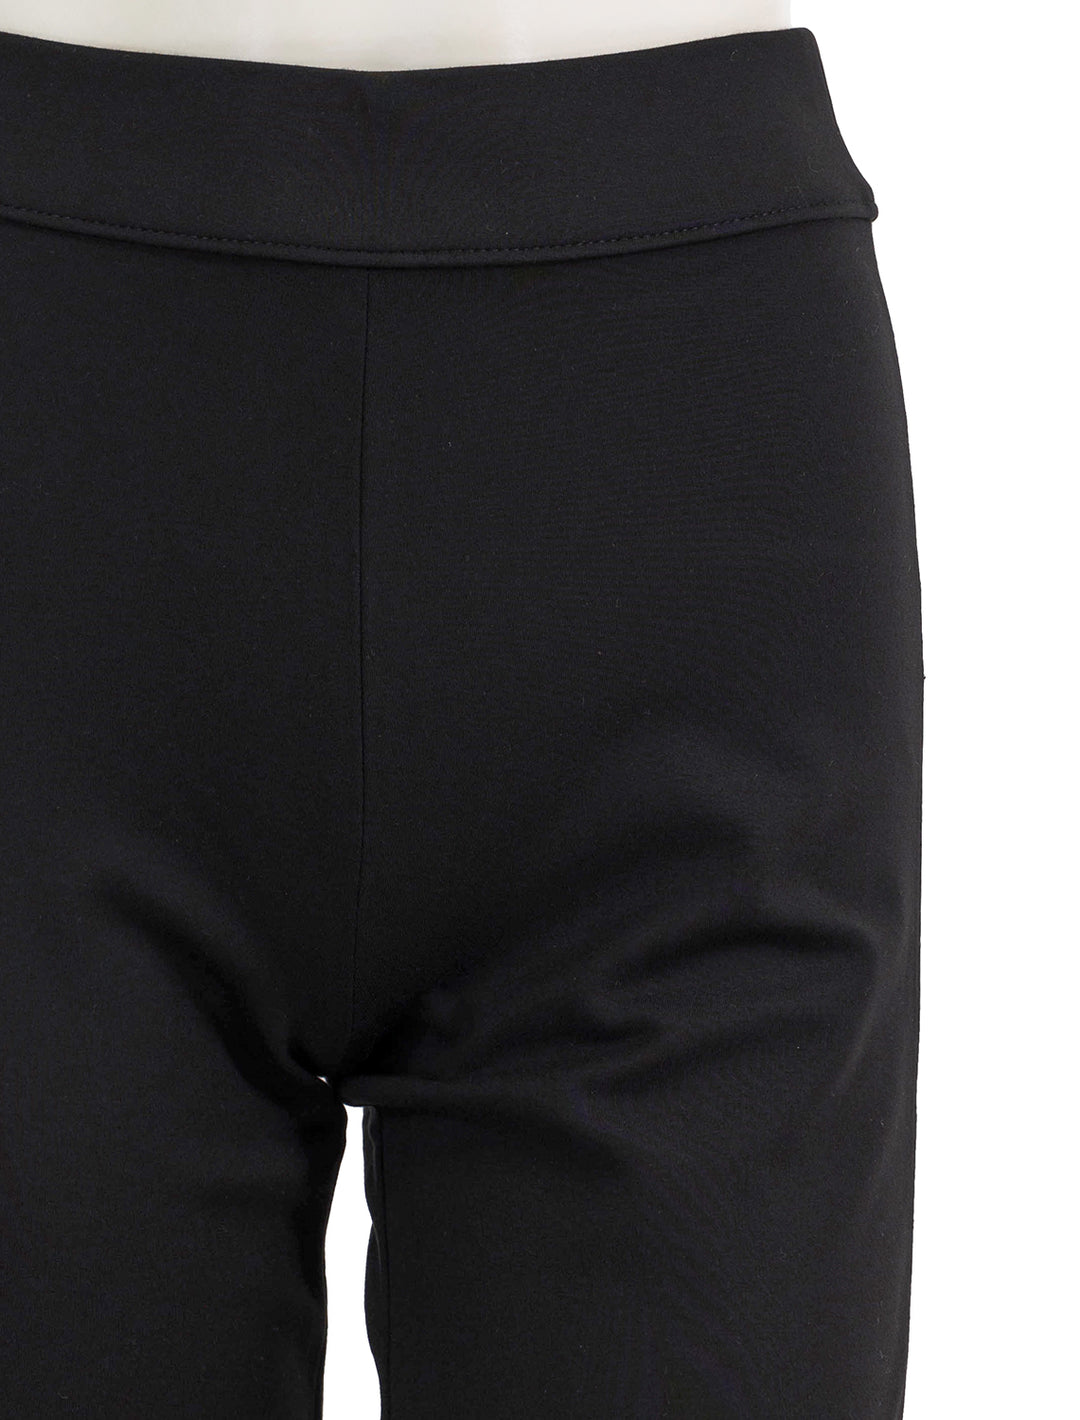 Close-up view of Rag & Bone's Irina Ponte Pant in Black.